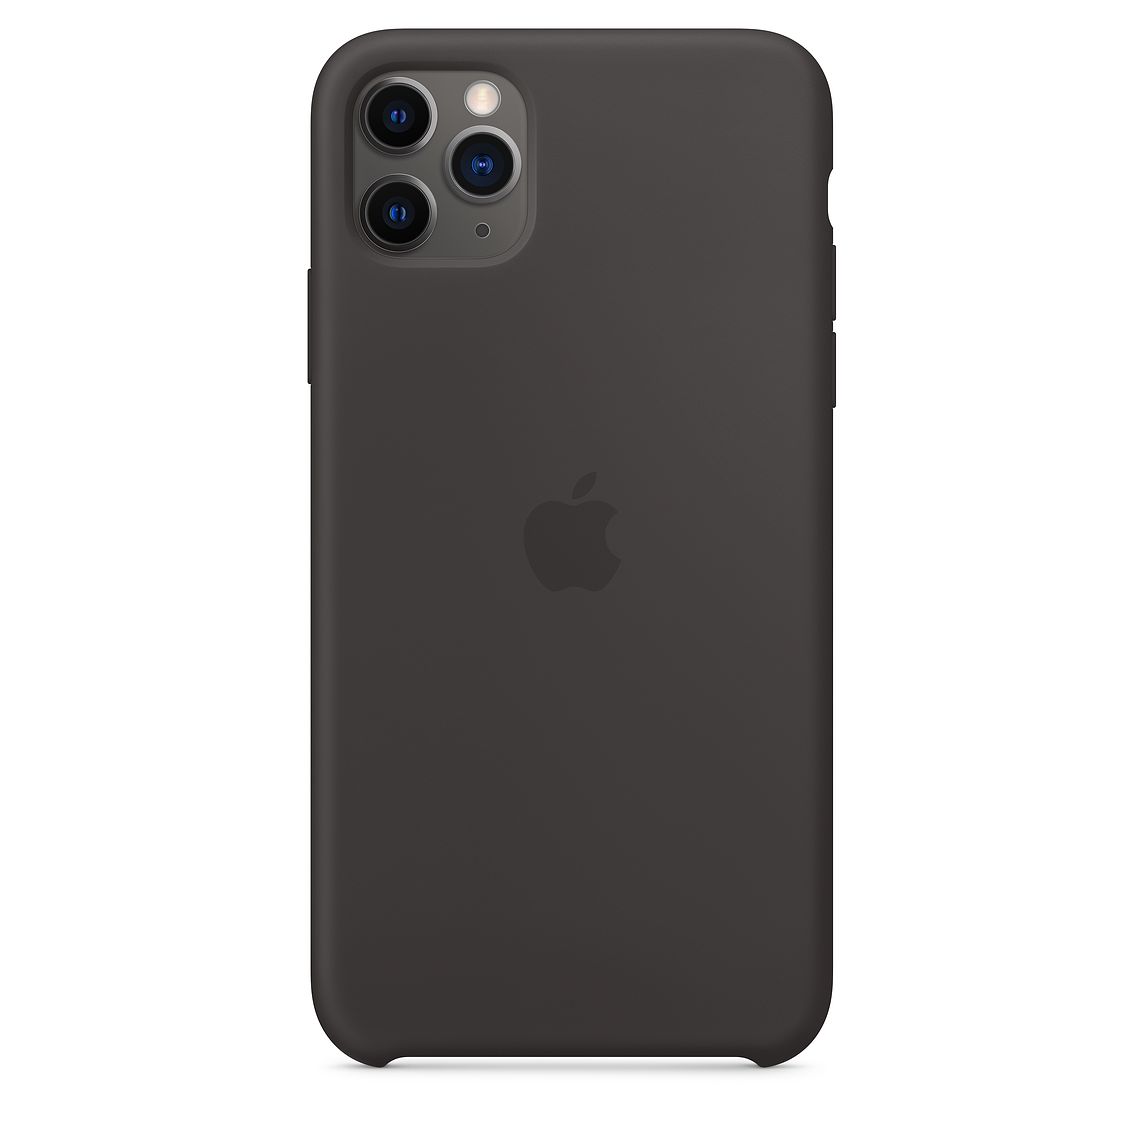 Apple Iphone 11 Pro Max Silicone Case